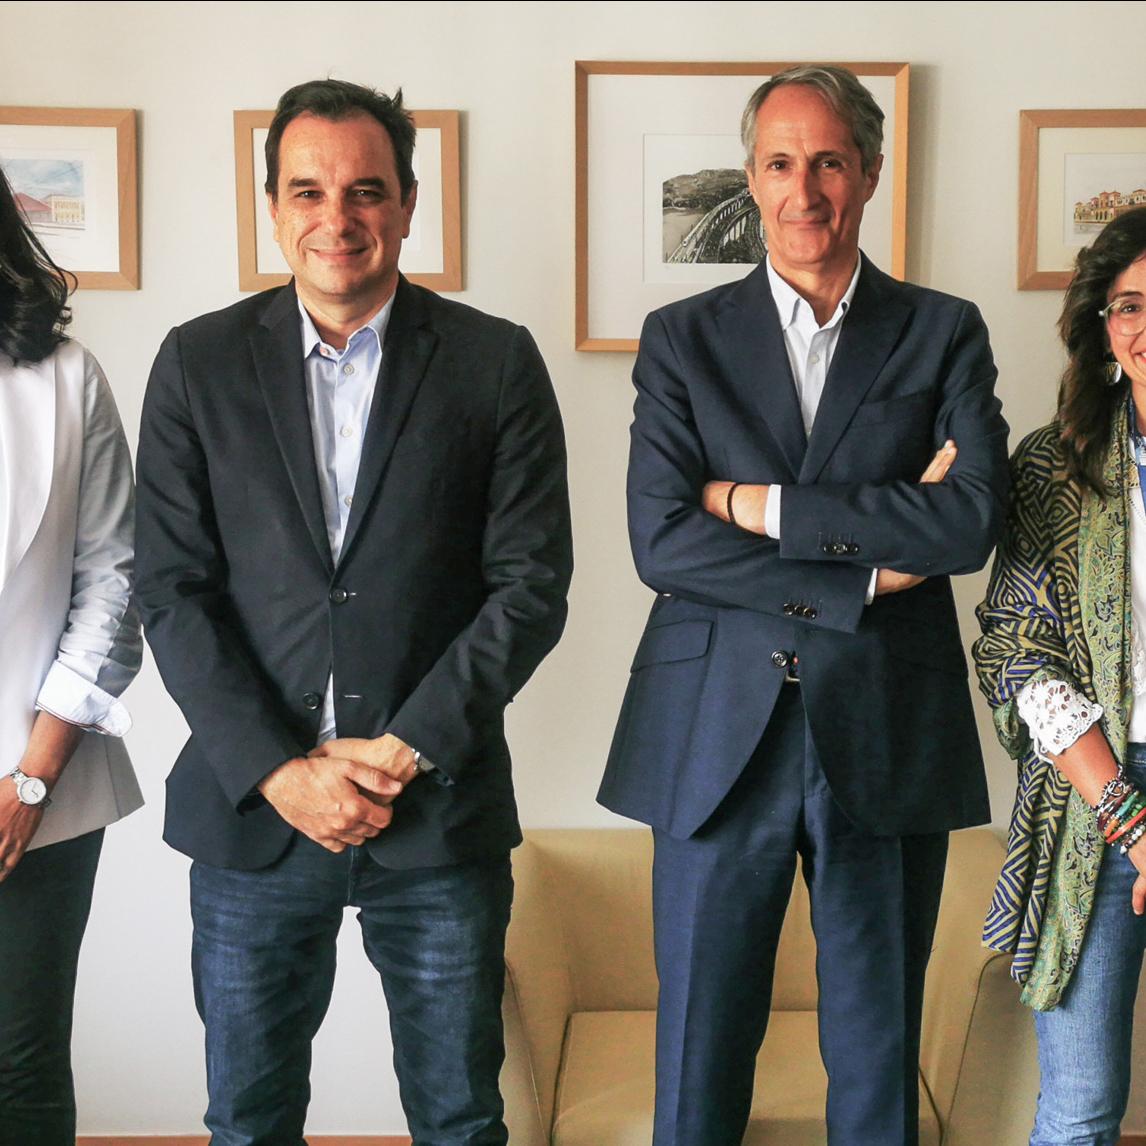 Maribel Santos, Sergio Vázquez Torrón, Óscar Carballo, María Serrano and Celestino Rodríguez